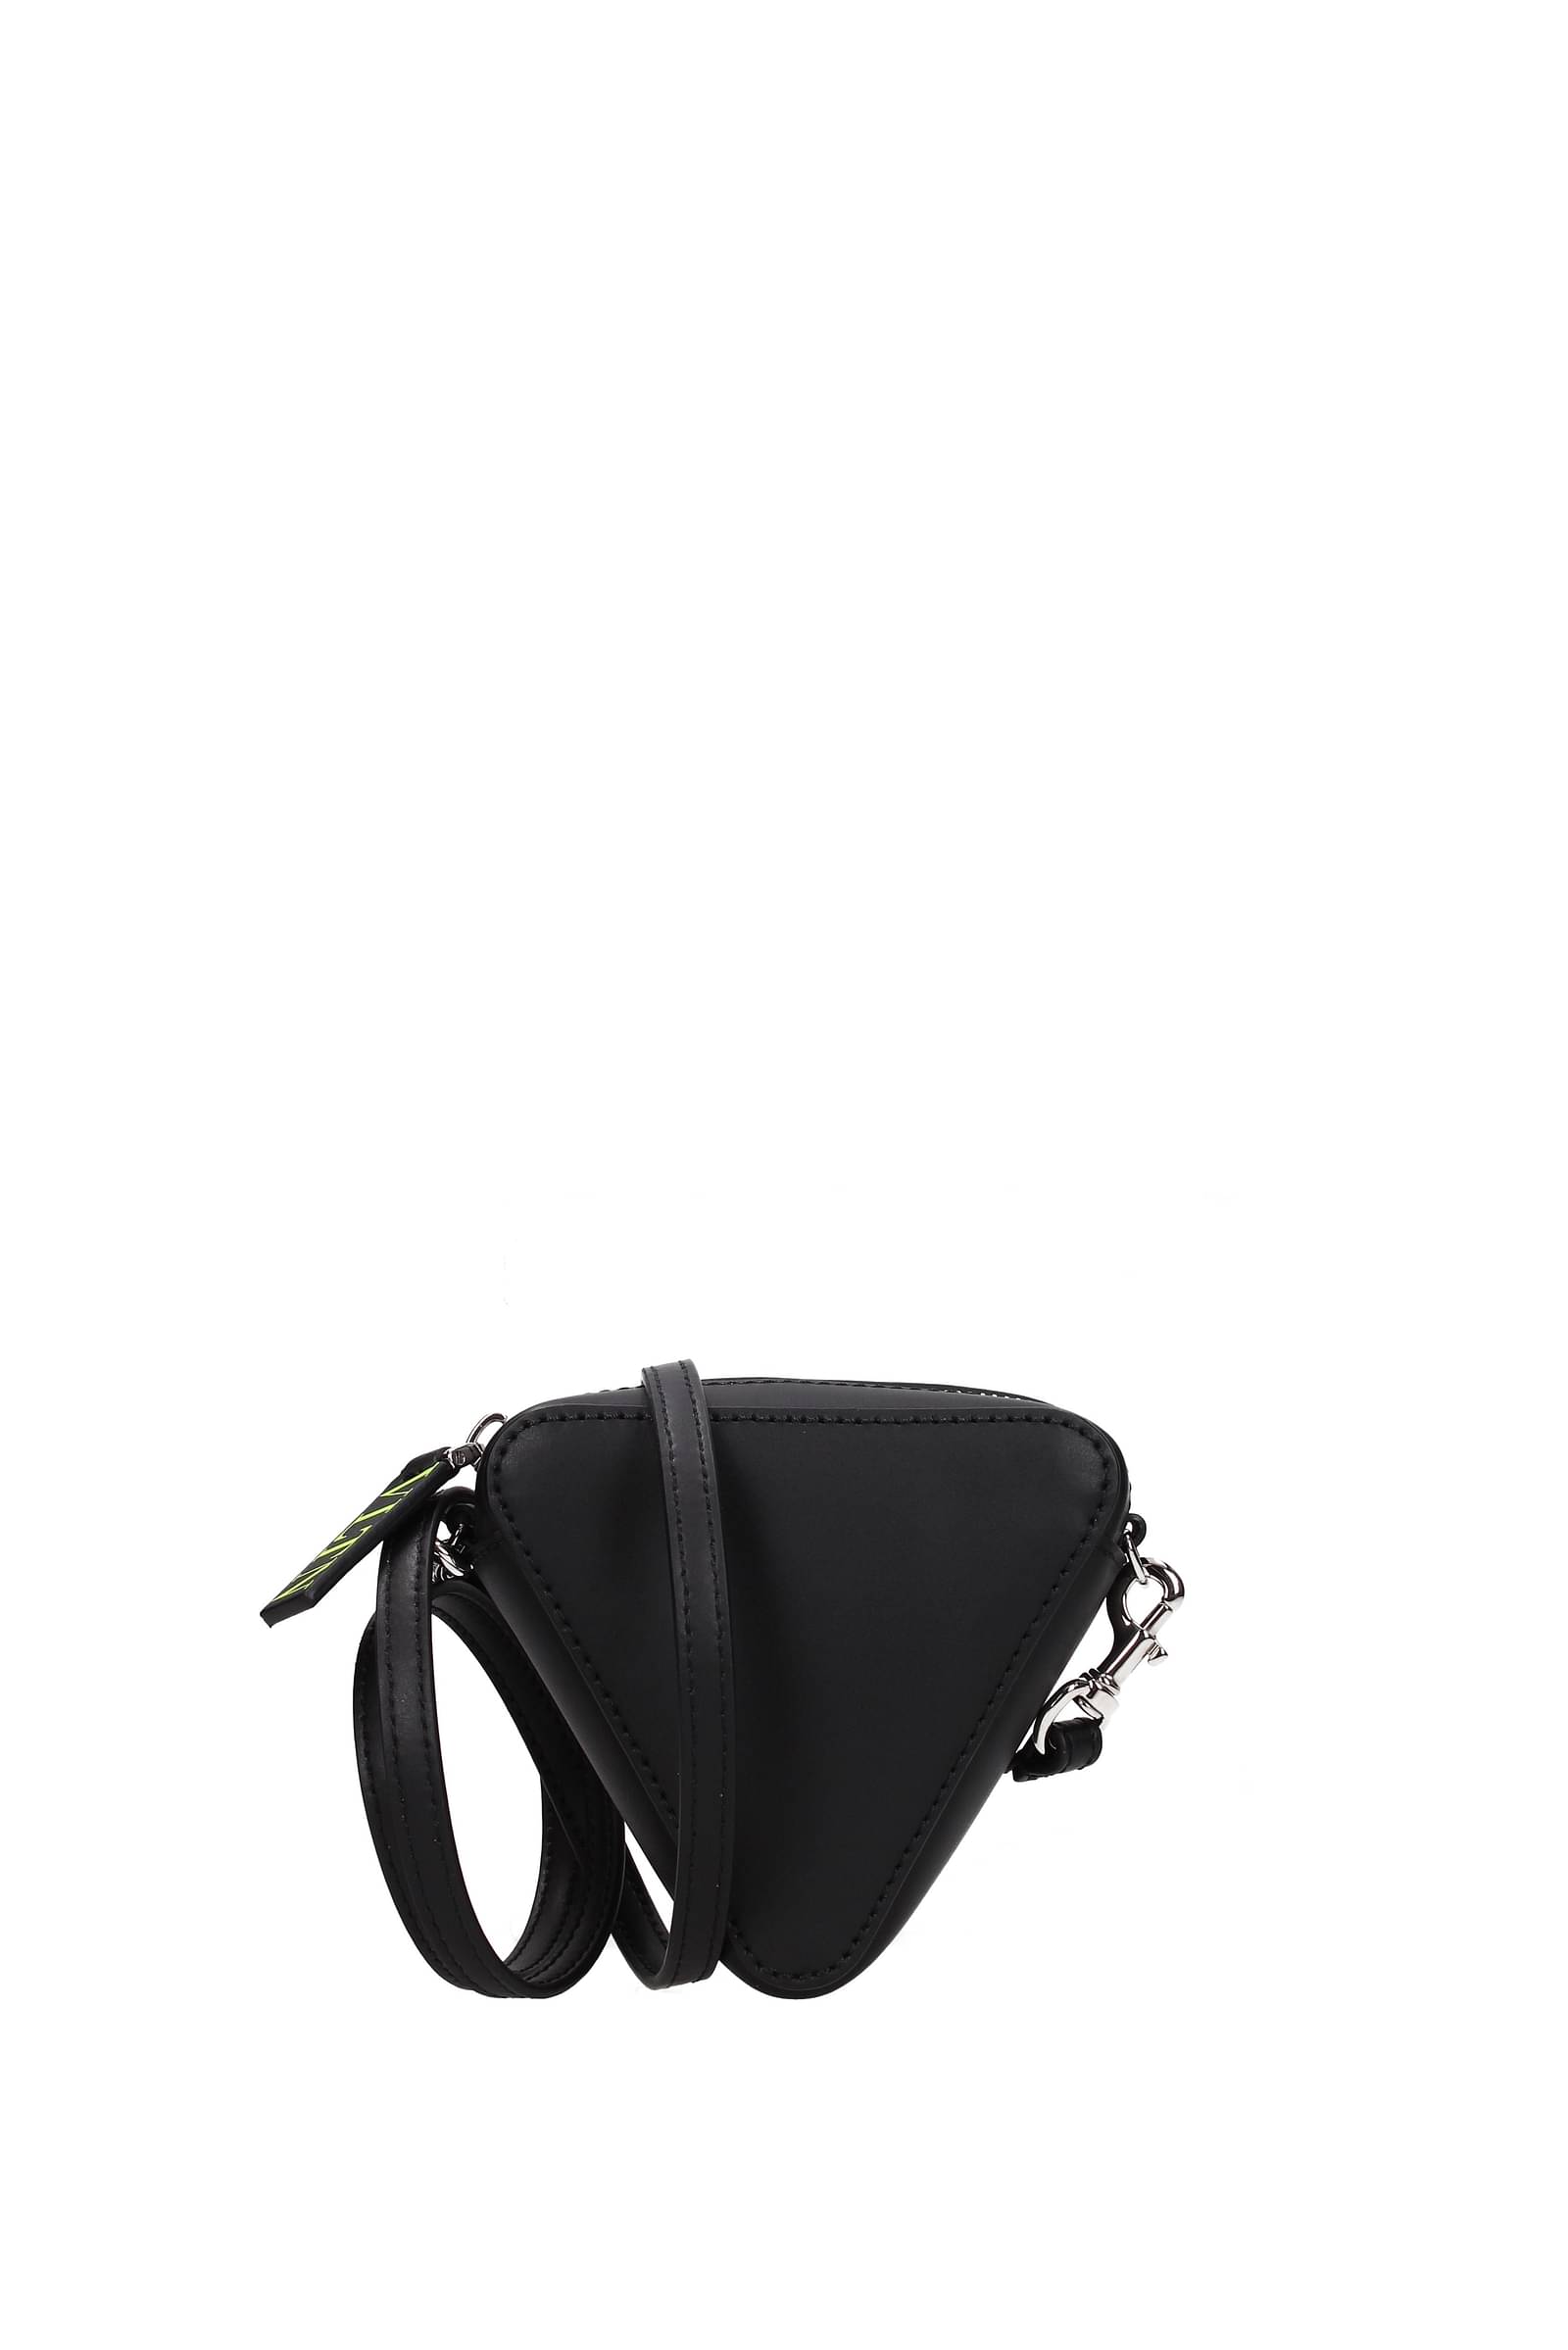 NWT✨Valentino Helene Black Leather Purse/Backpack | Black leather purse,  Backpack purse, Leather